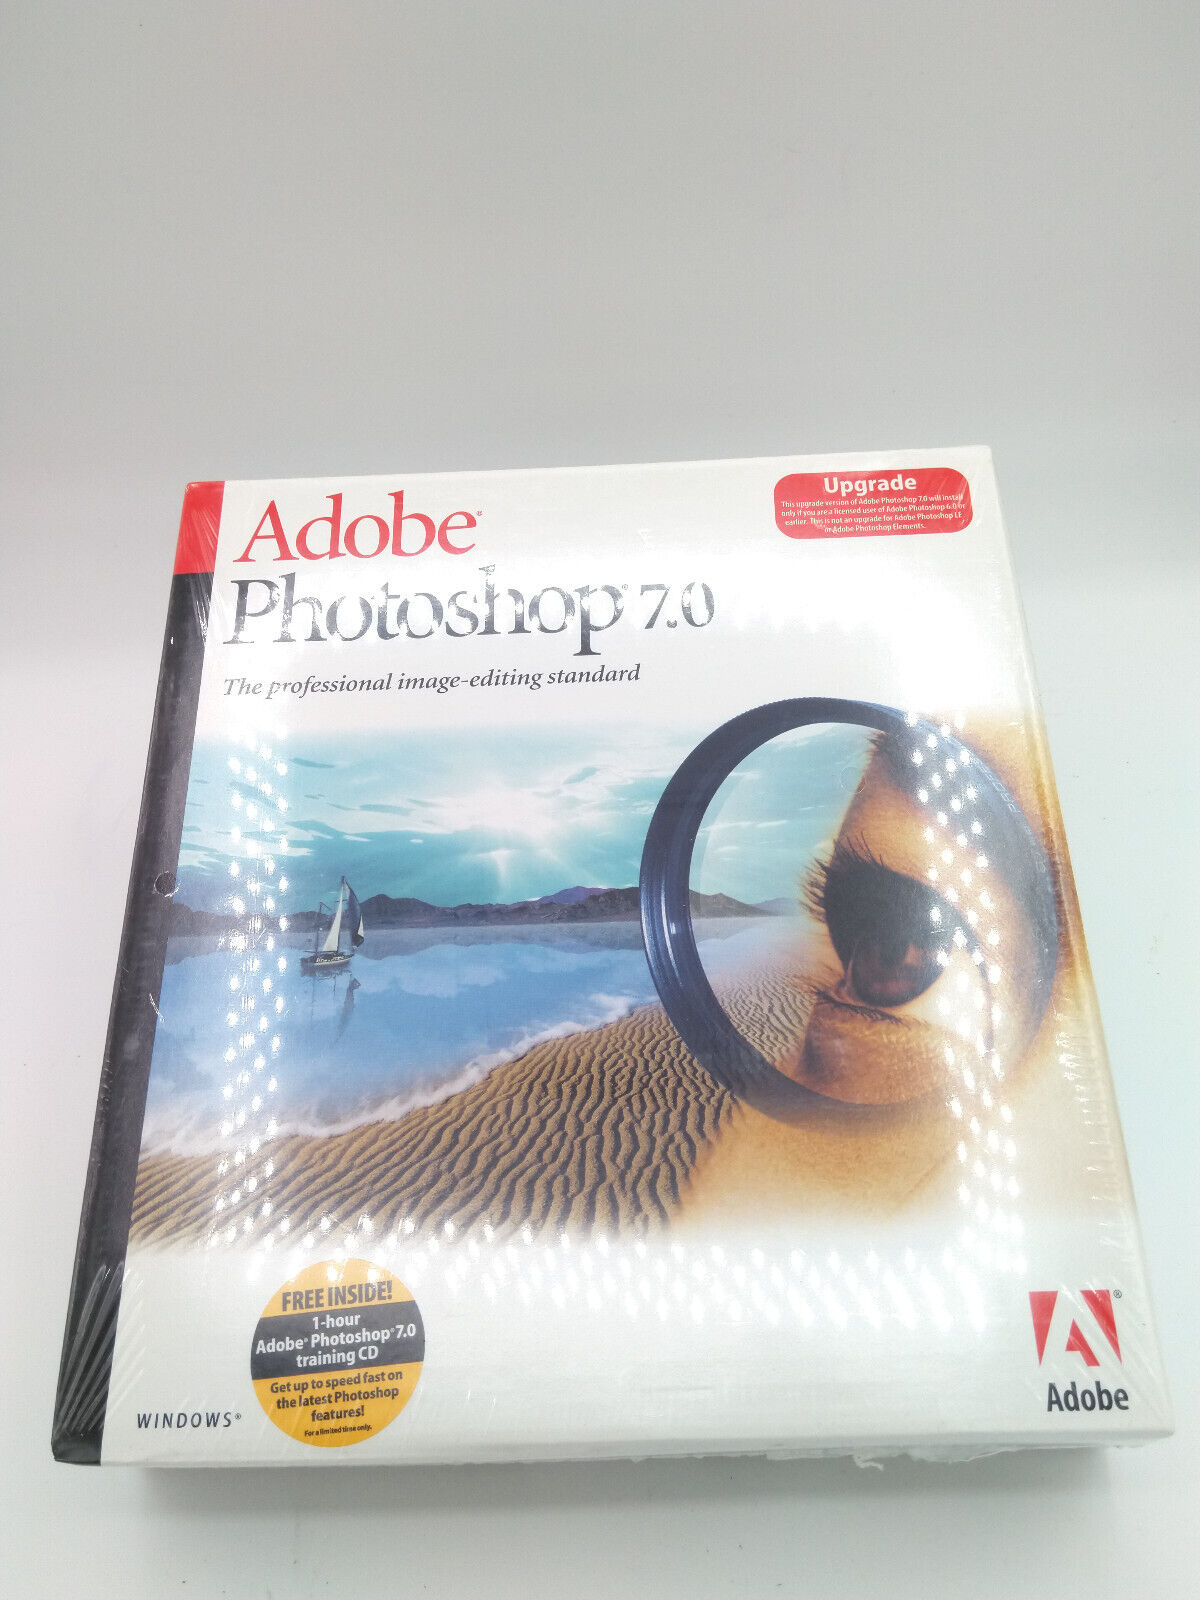 Adobe Photoshop 7.0 (Retail) (1 User/s) - Upgrade for Windows 23101623 BRAND NEW